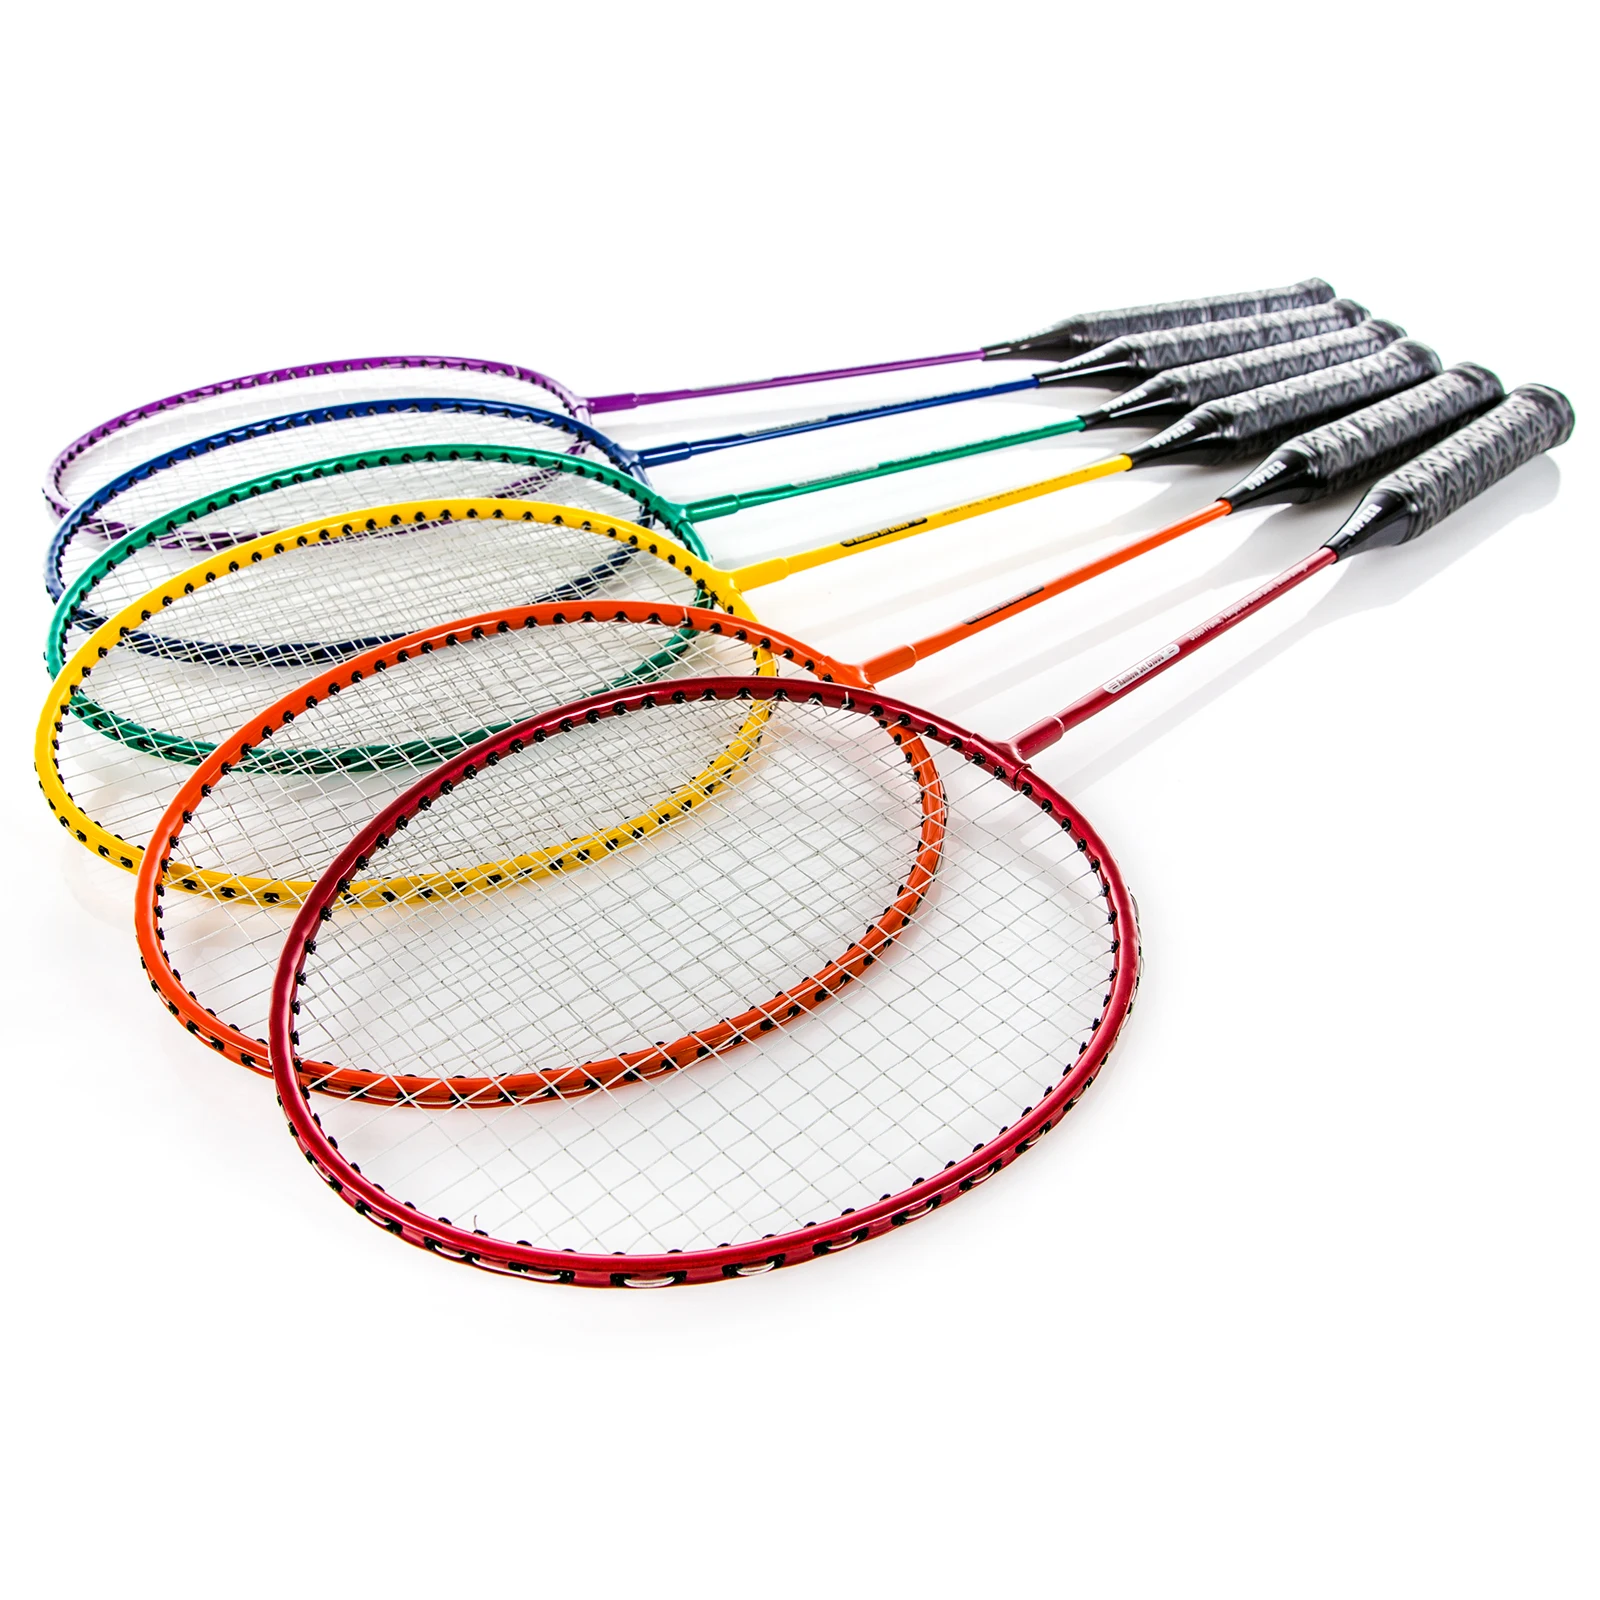 Durable Hot Selling Badminton Set 4 Rackets Favorable Price Products Lining Badminton Racket Buy Cheap Badminton Rackets,Ball Badminton Racket,Ball Badminton Racket Product on Alibaba.com